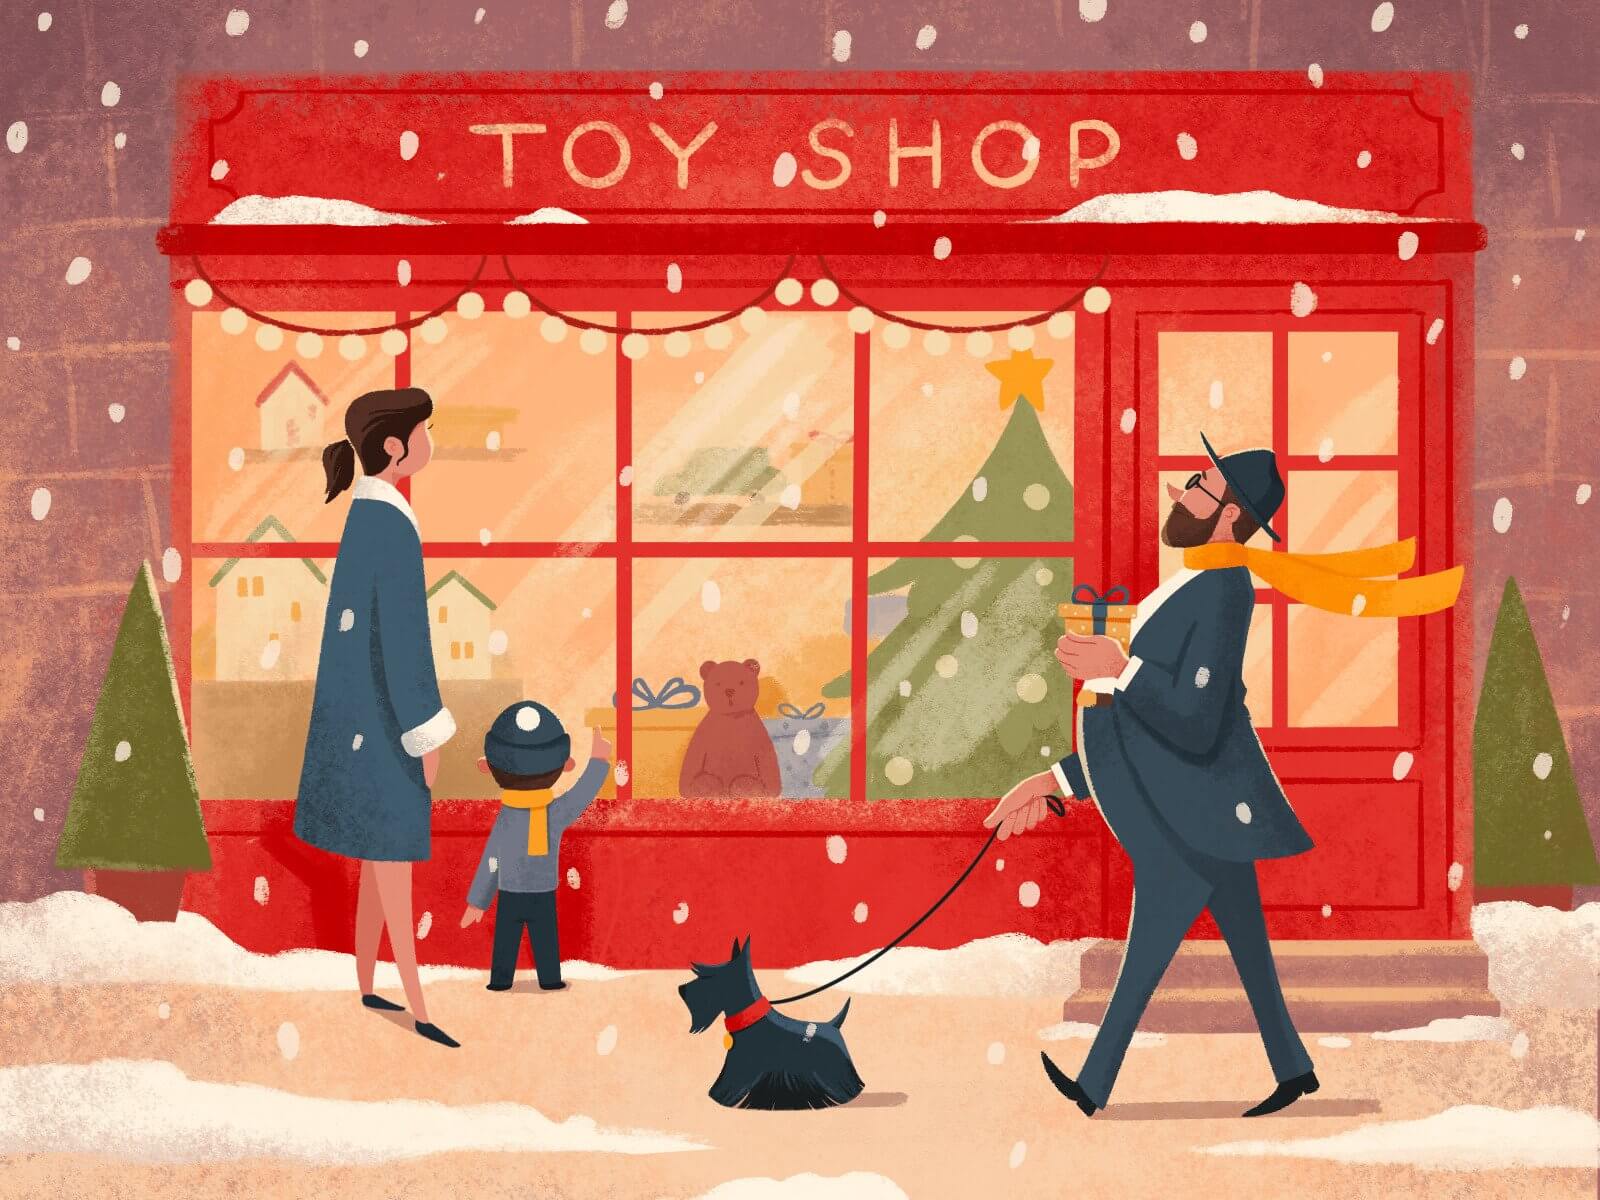 Toy Shop Christmas Illustration in Town by Phenomenon Studio